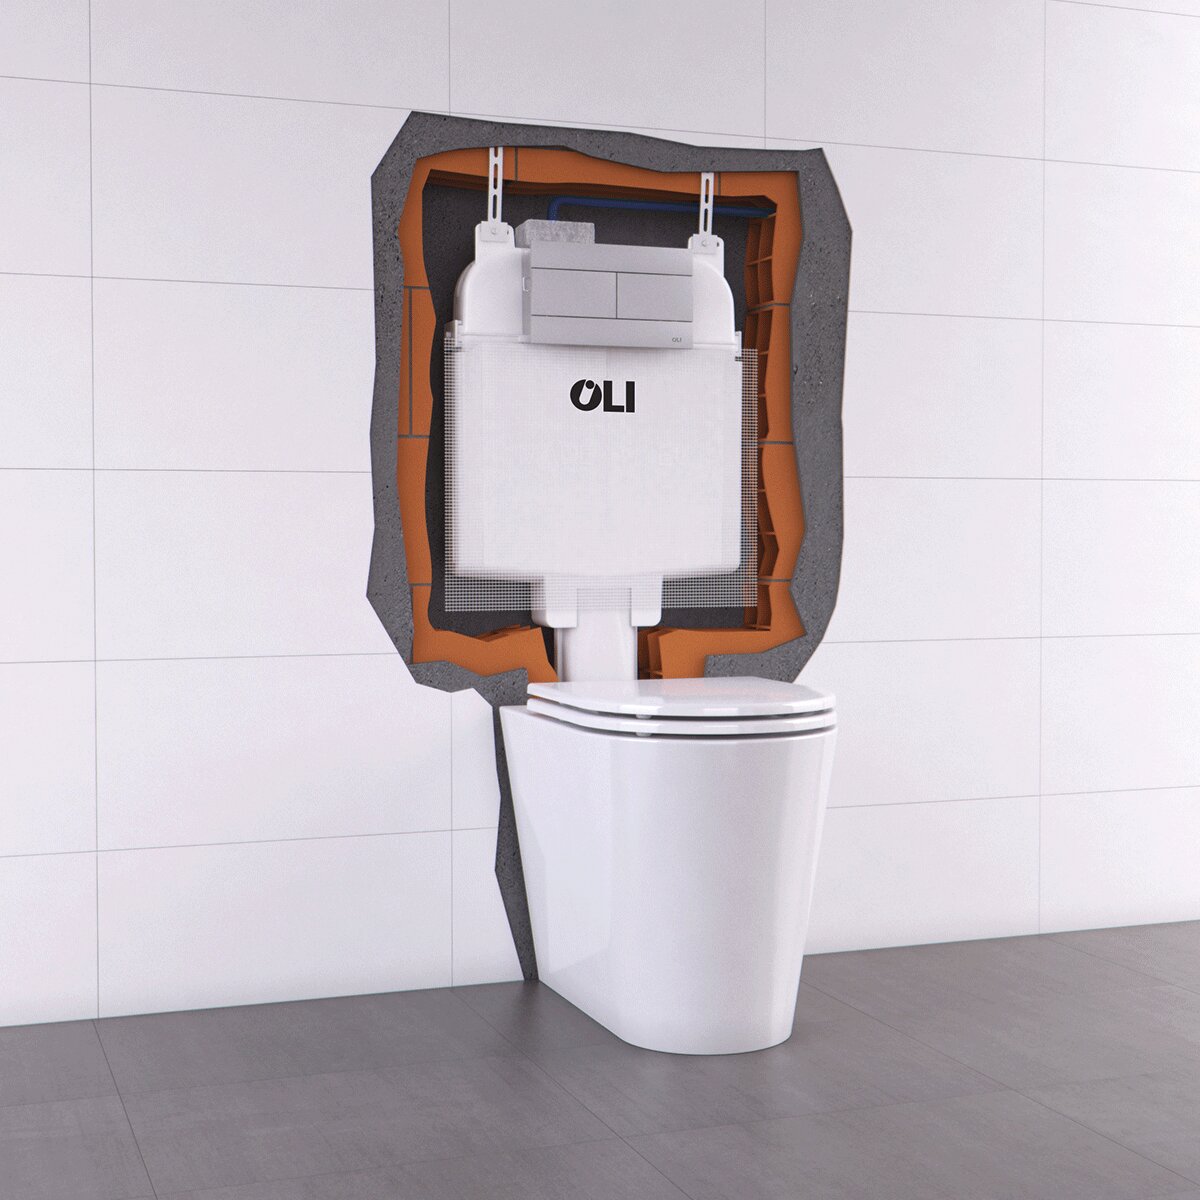 OLI OLI74 PLUS built-in toilet cistern for floor sanitary fixtures